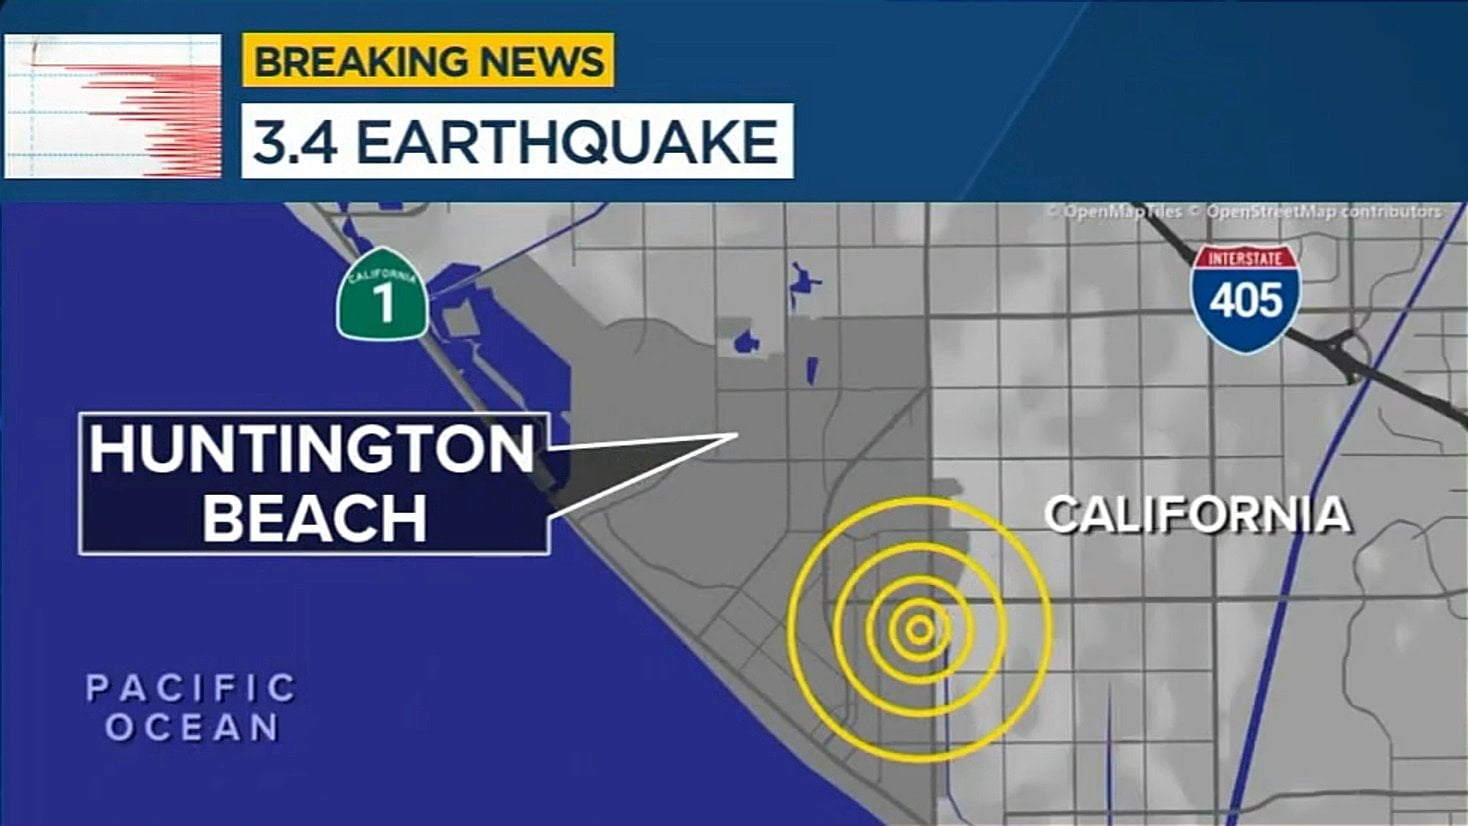 3.4 Earthquake Shakes Huntington Beach: Key Details and Local Reactions